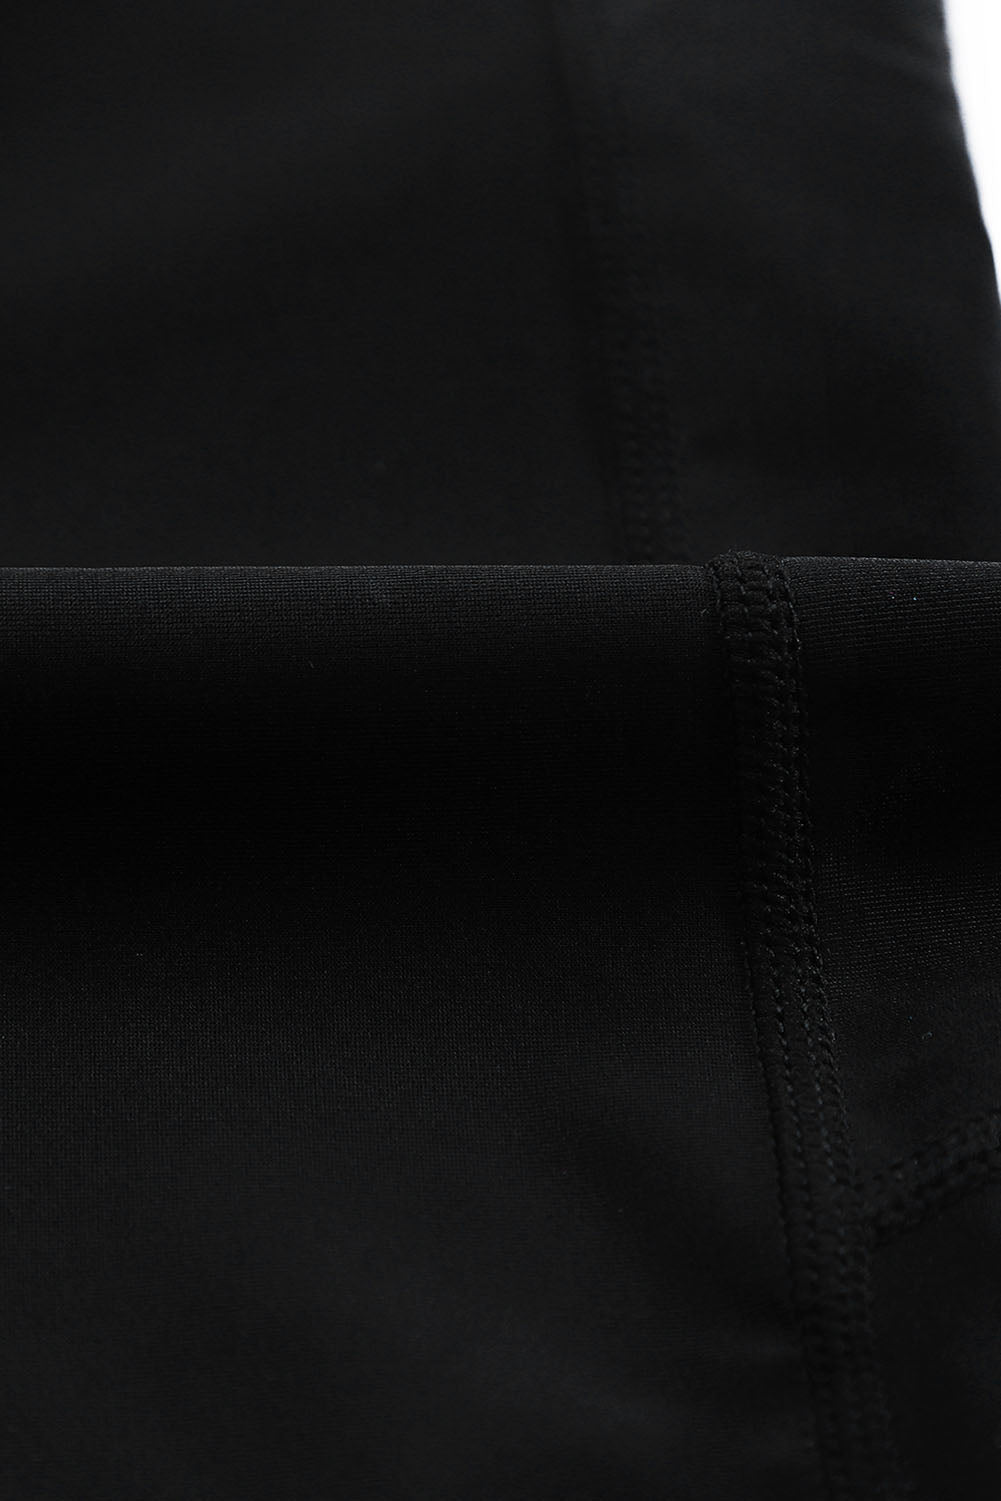 Crne sportske bermude bikini kratke hlače s prekriženim strukom